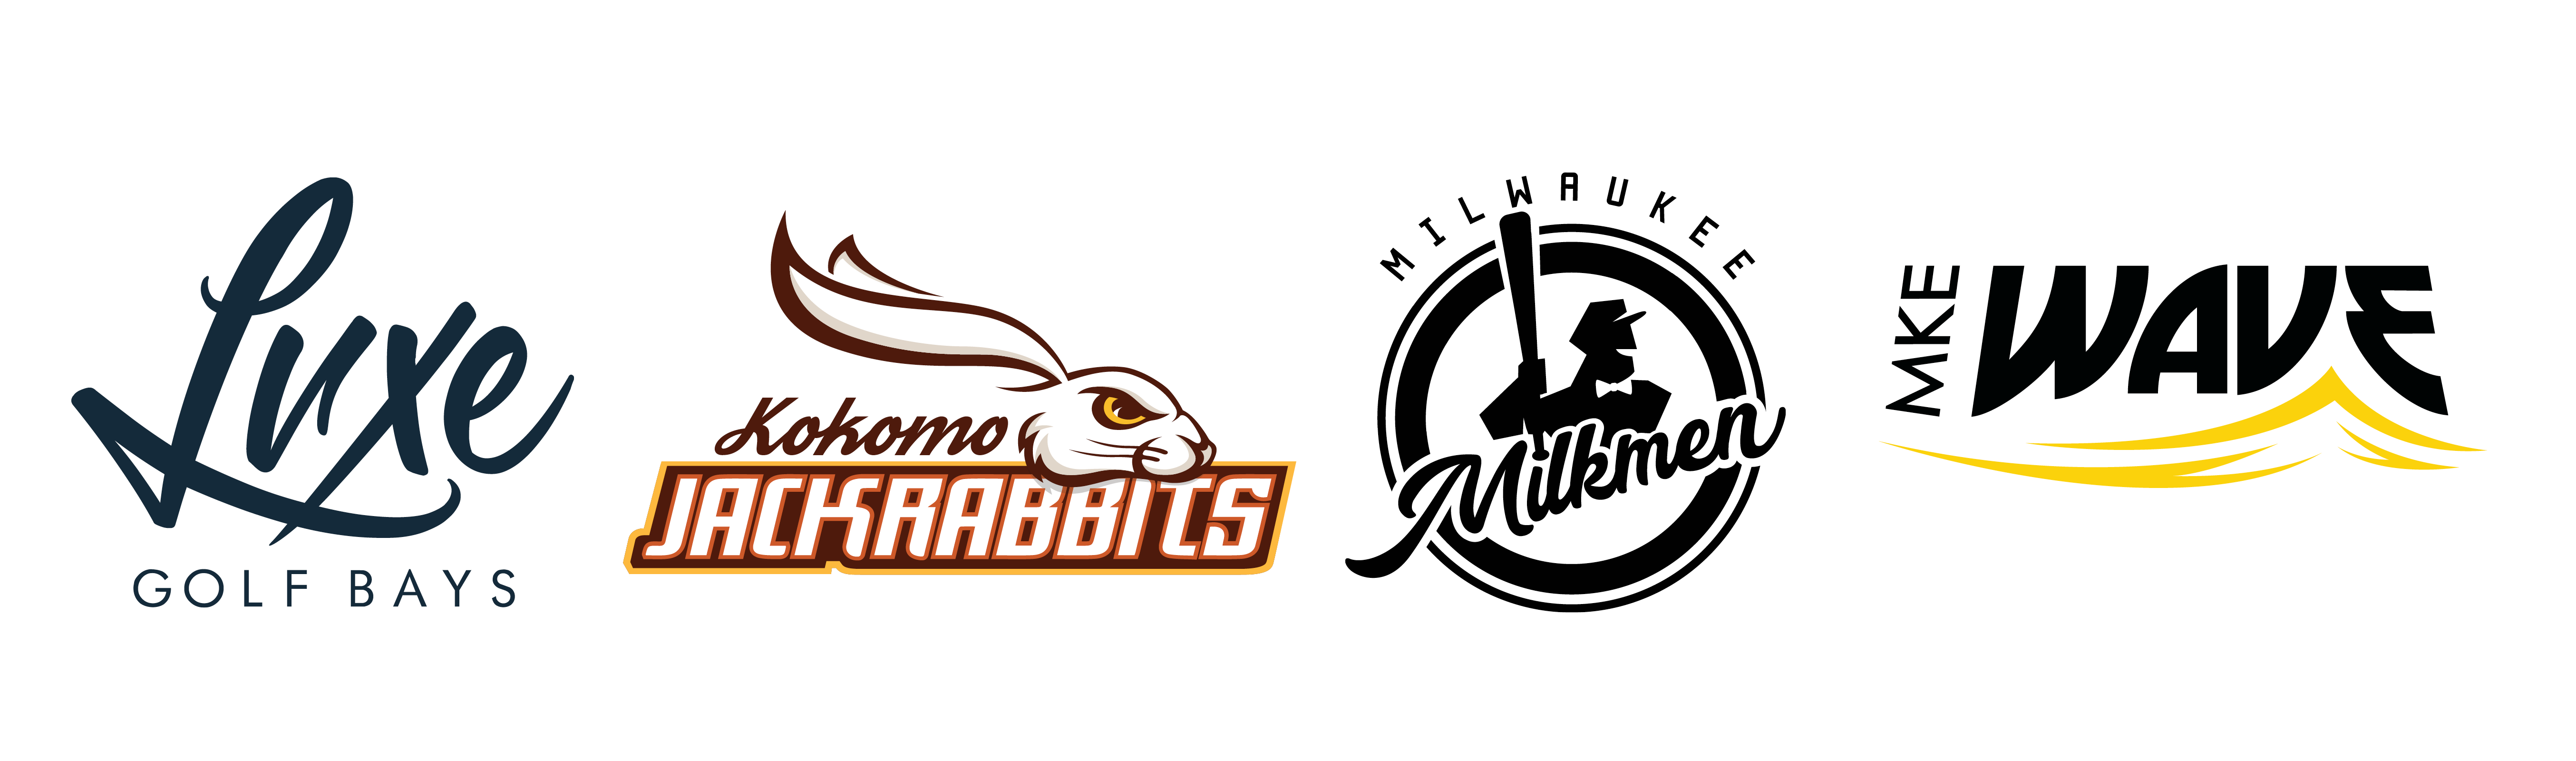 Milwaukee Wave, Wisconsins Midwest Pro Baseball Team, Kokomo Jackrabbits, Luxe Golf Bay